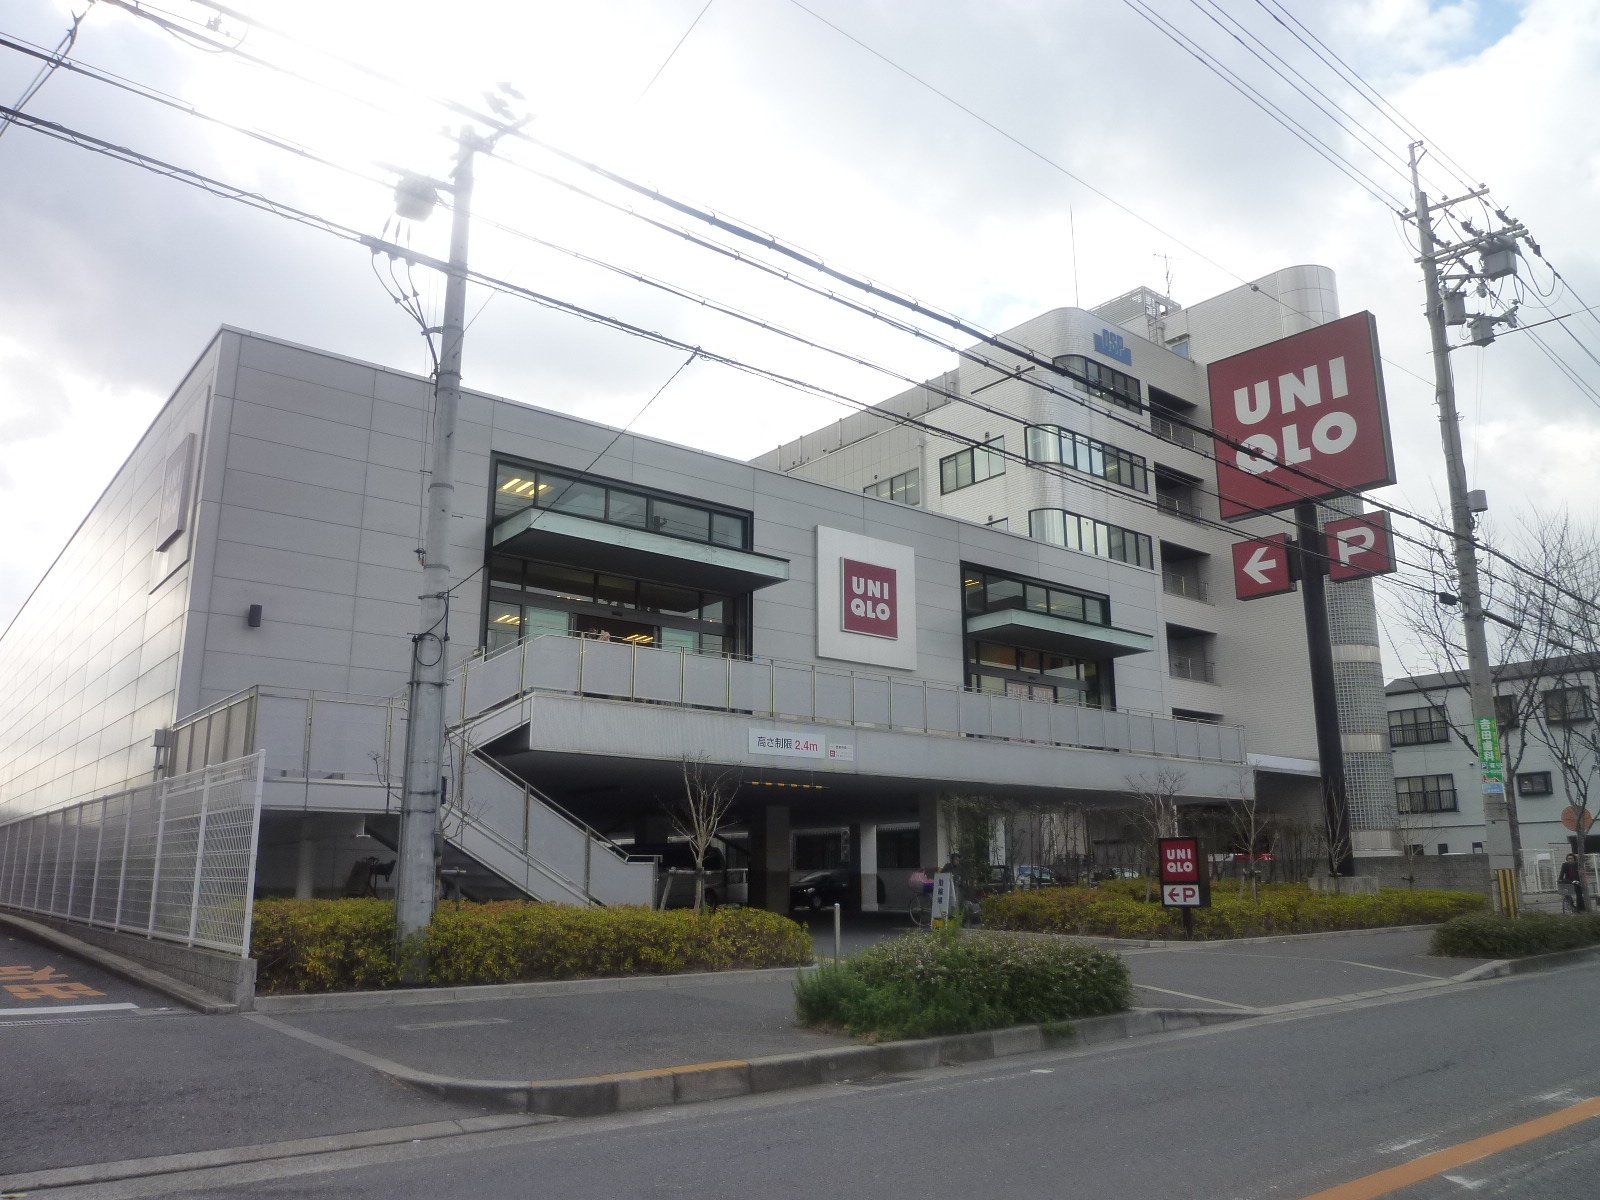 Shopping centre. 595m to UNIQLO Yao Aoyama (shopping center)